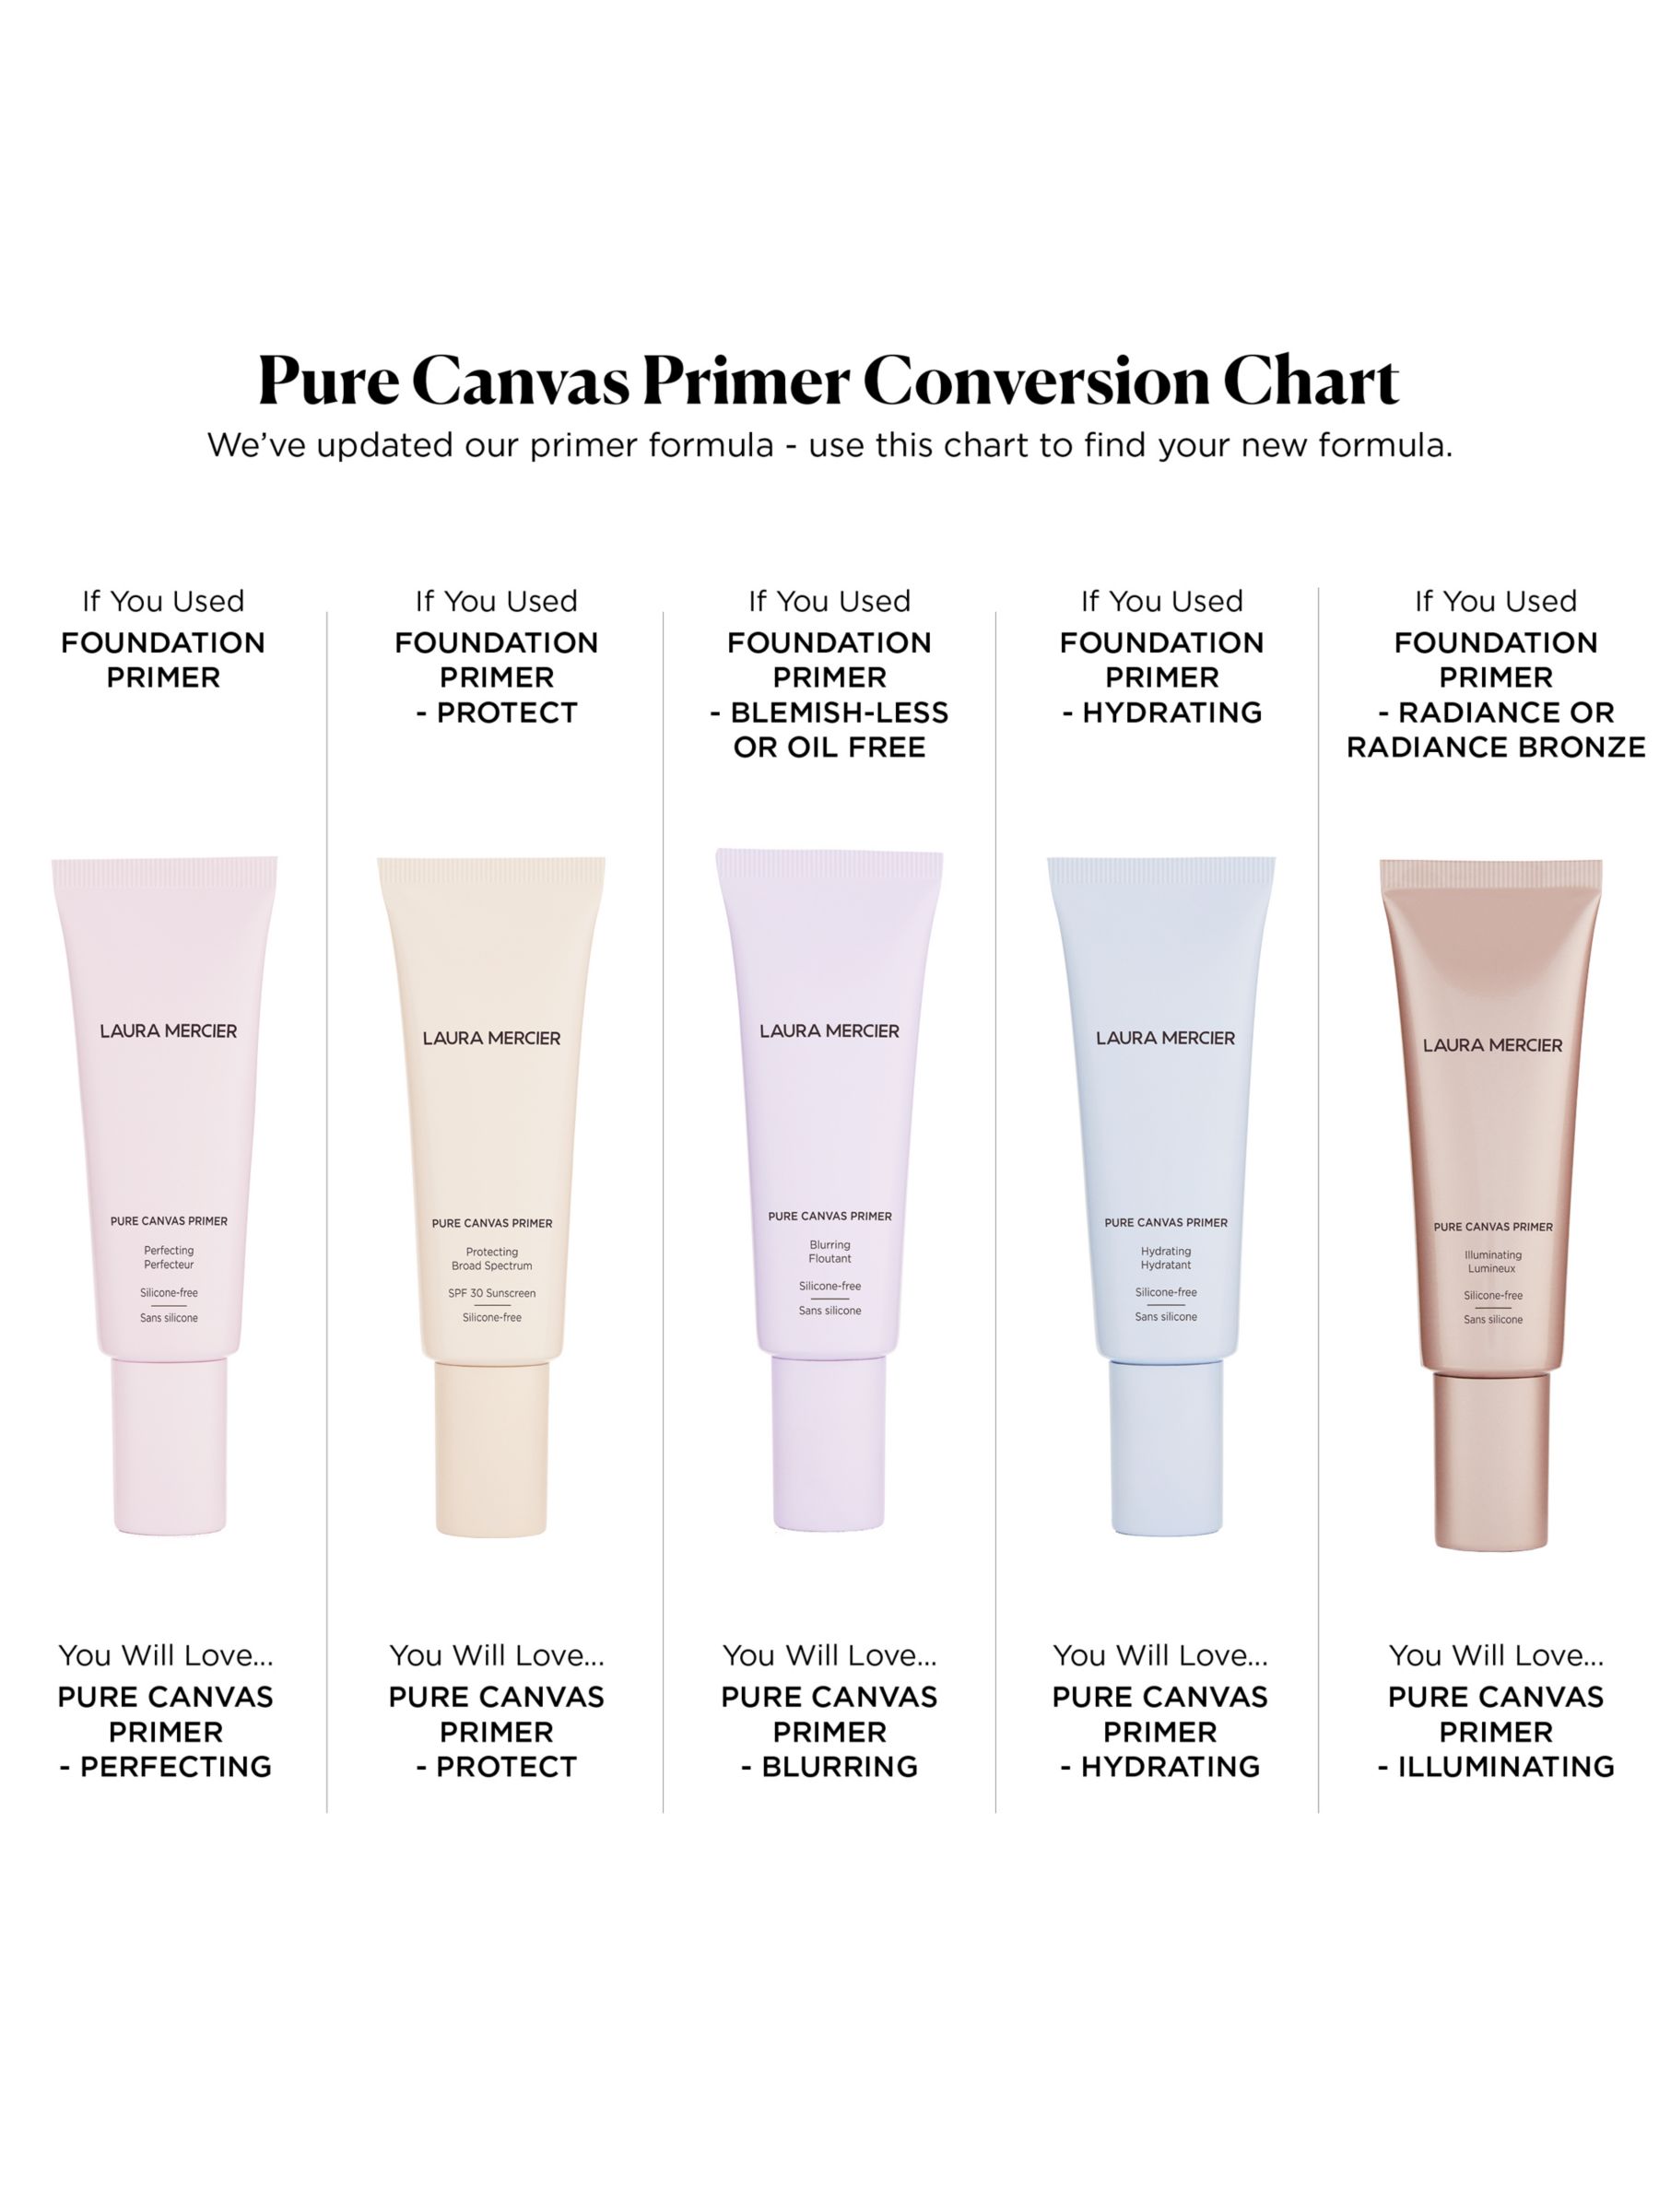 Laura Mercier Pure Canvas Primer Perfecting, 50ml